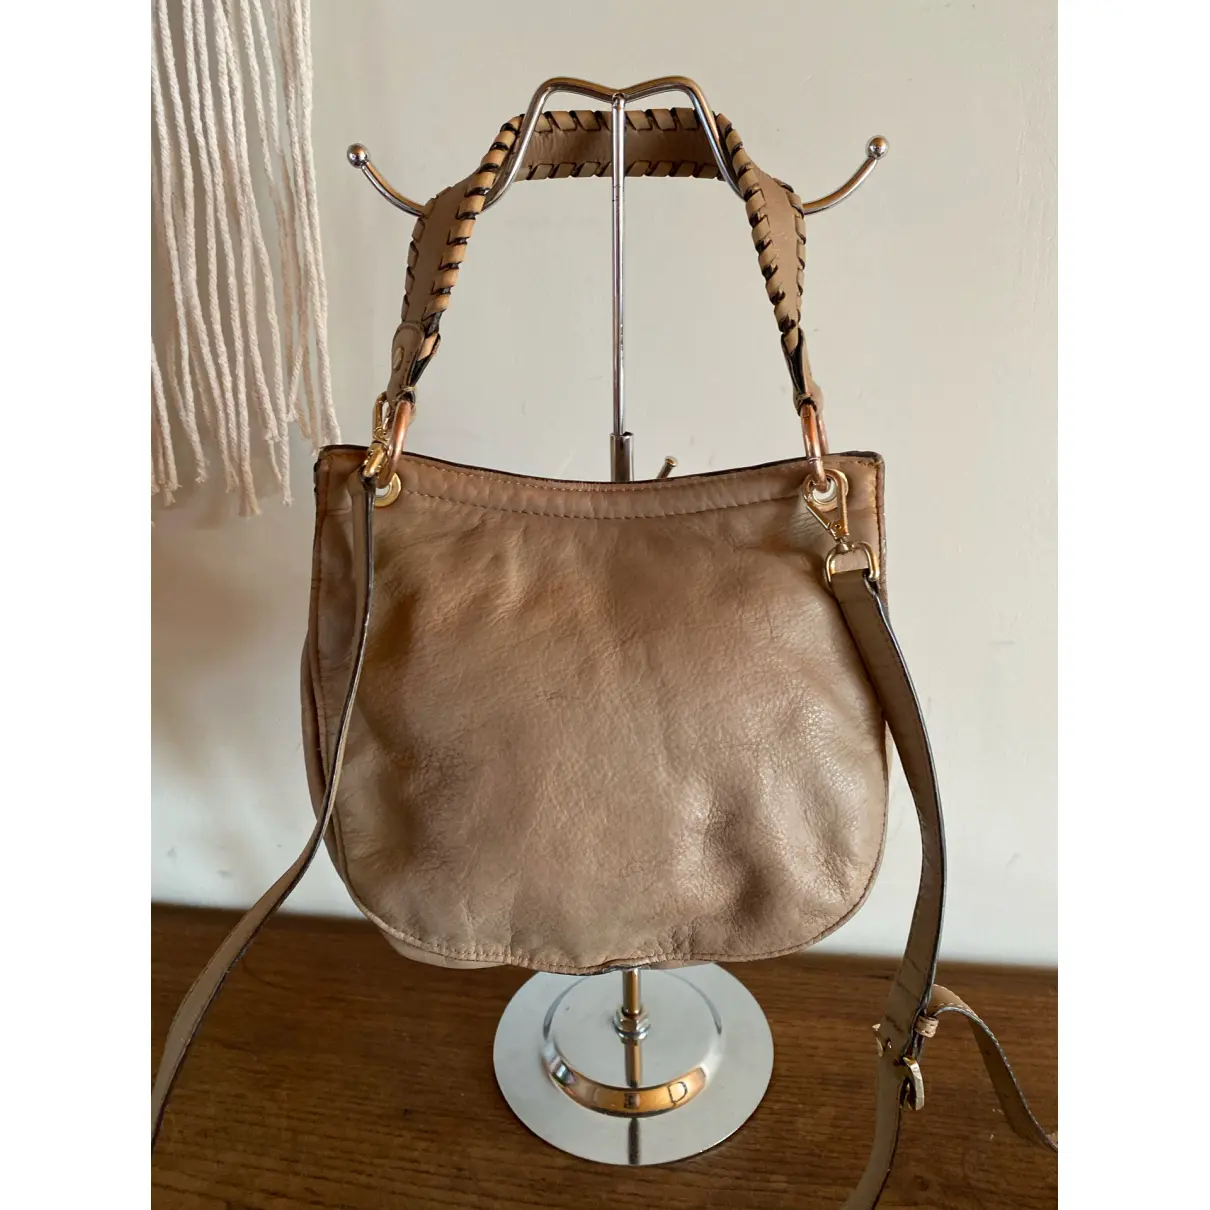 Buy Michael Kors Brooklyn leather handbag online